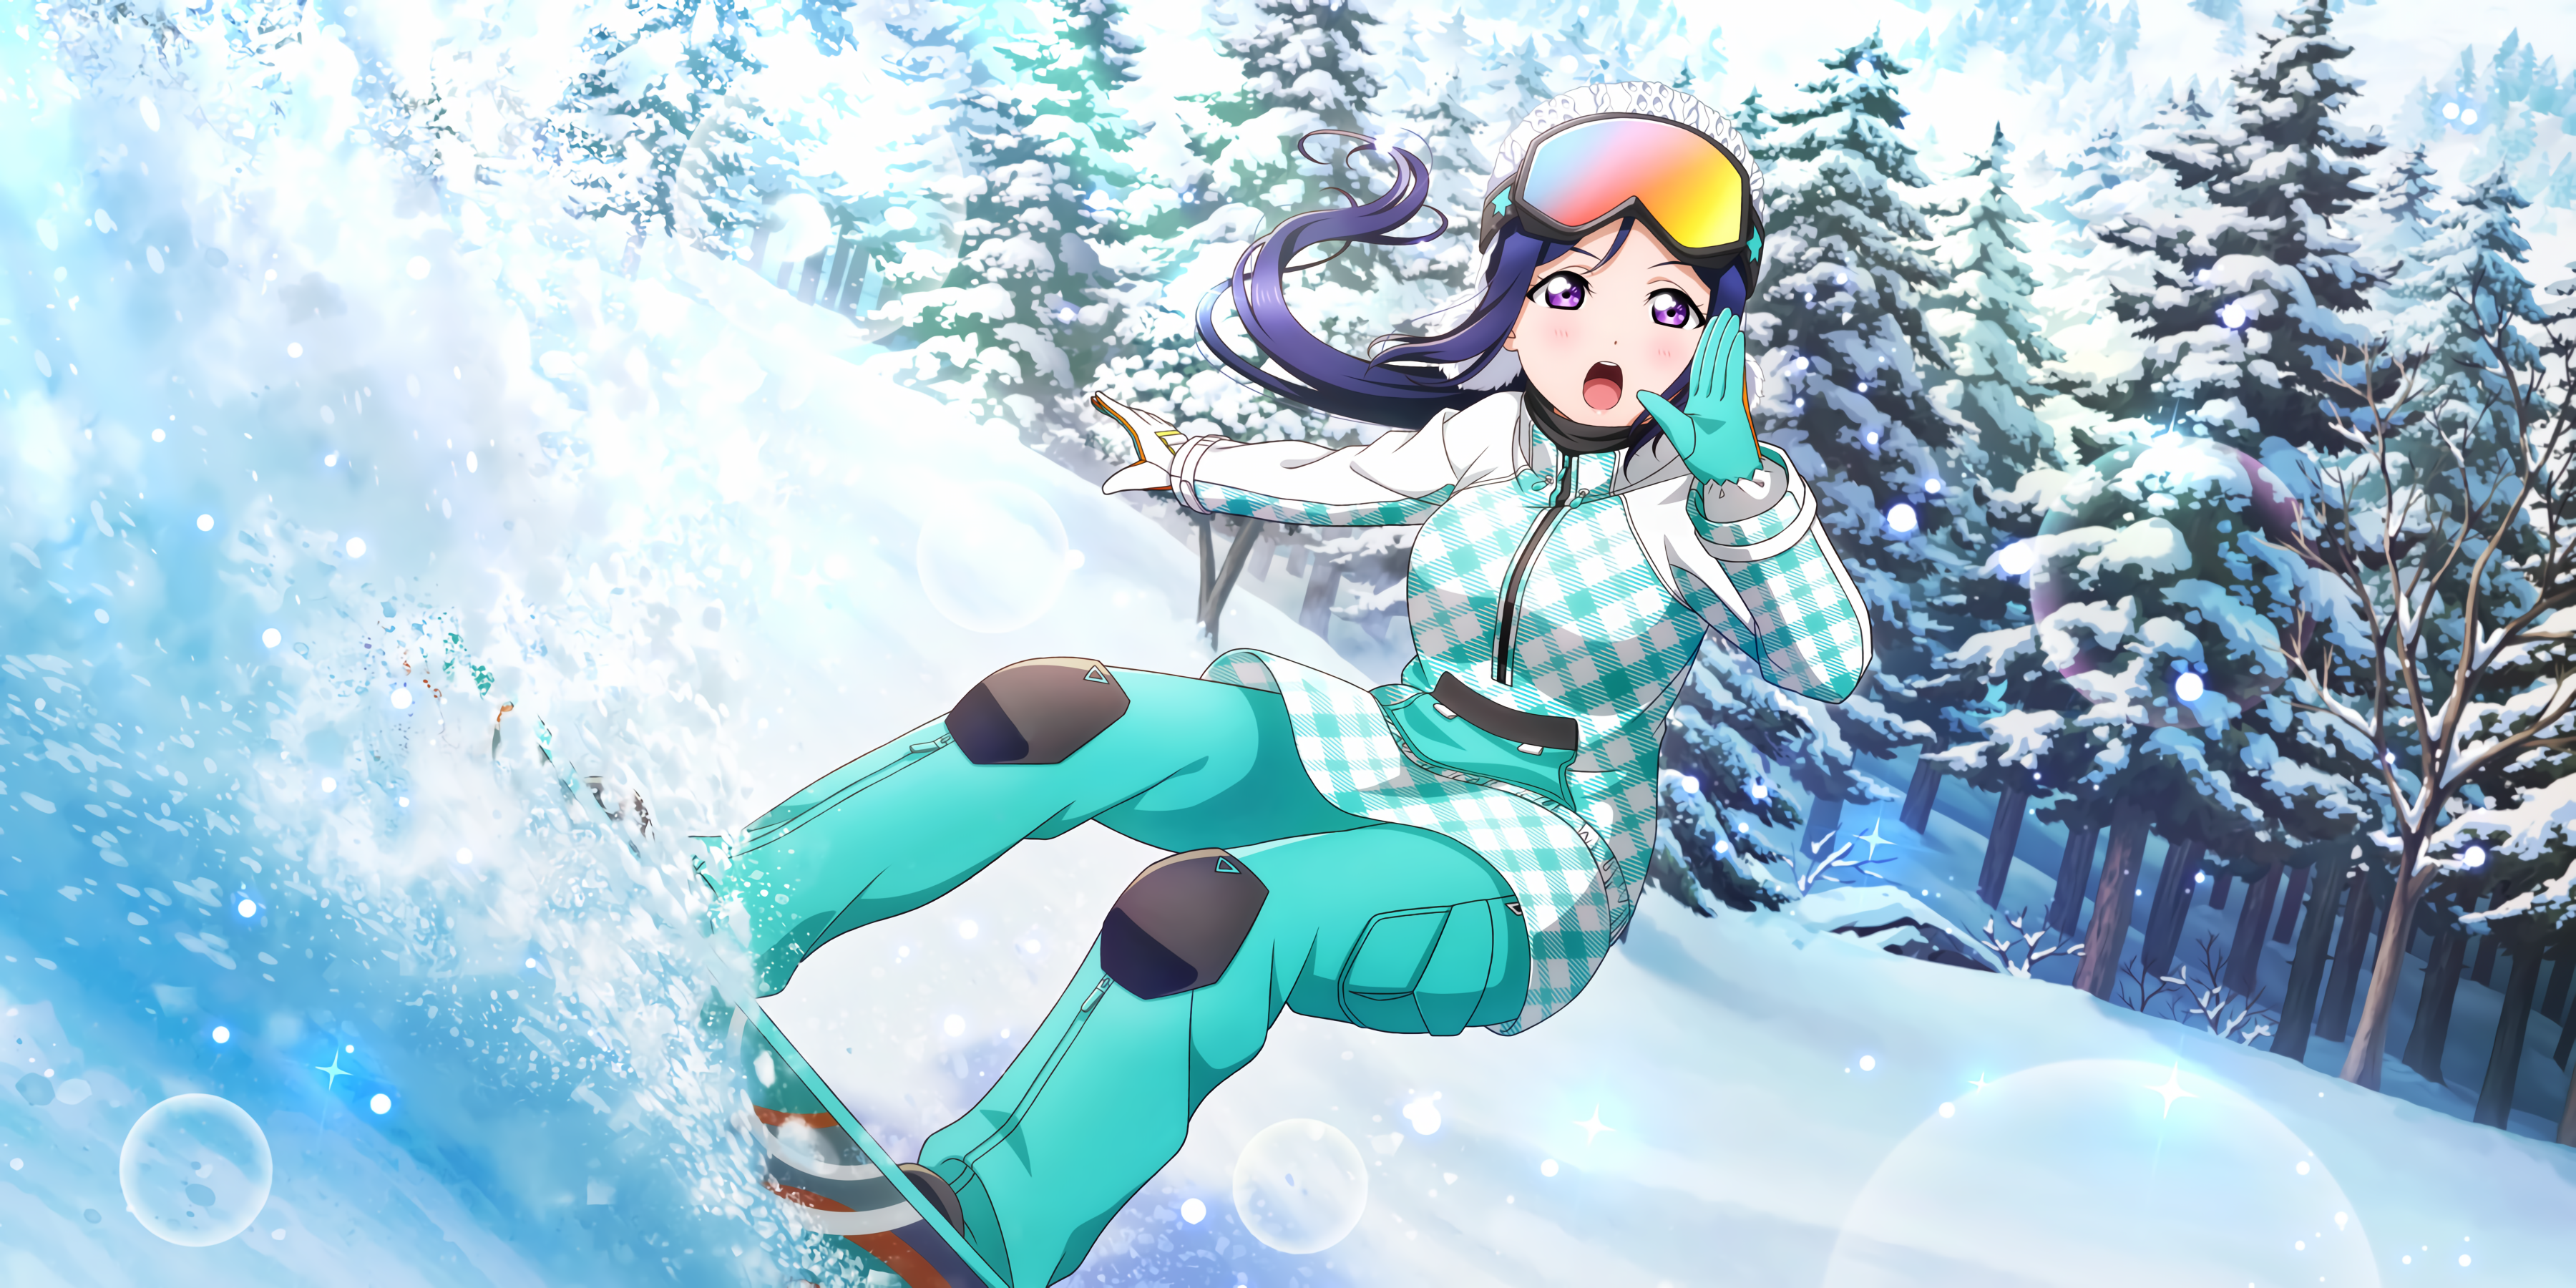 Matsuura Kanan Love Live Sunshine Love Live Anime Anime Girls Snow Gloves Trees Snowboarding Snowboa 3600x1800